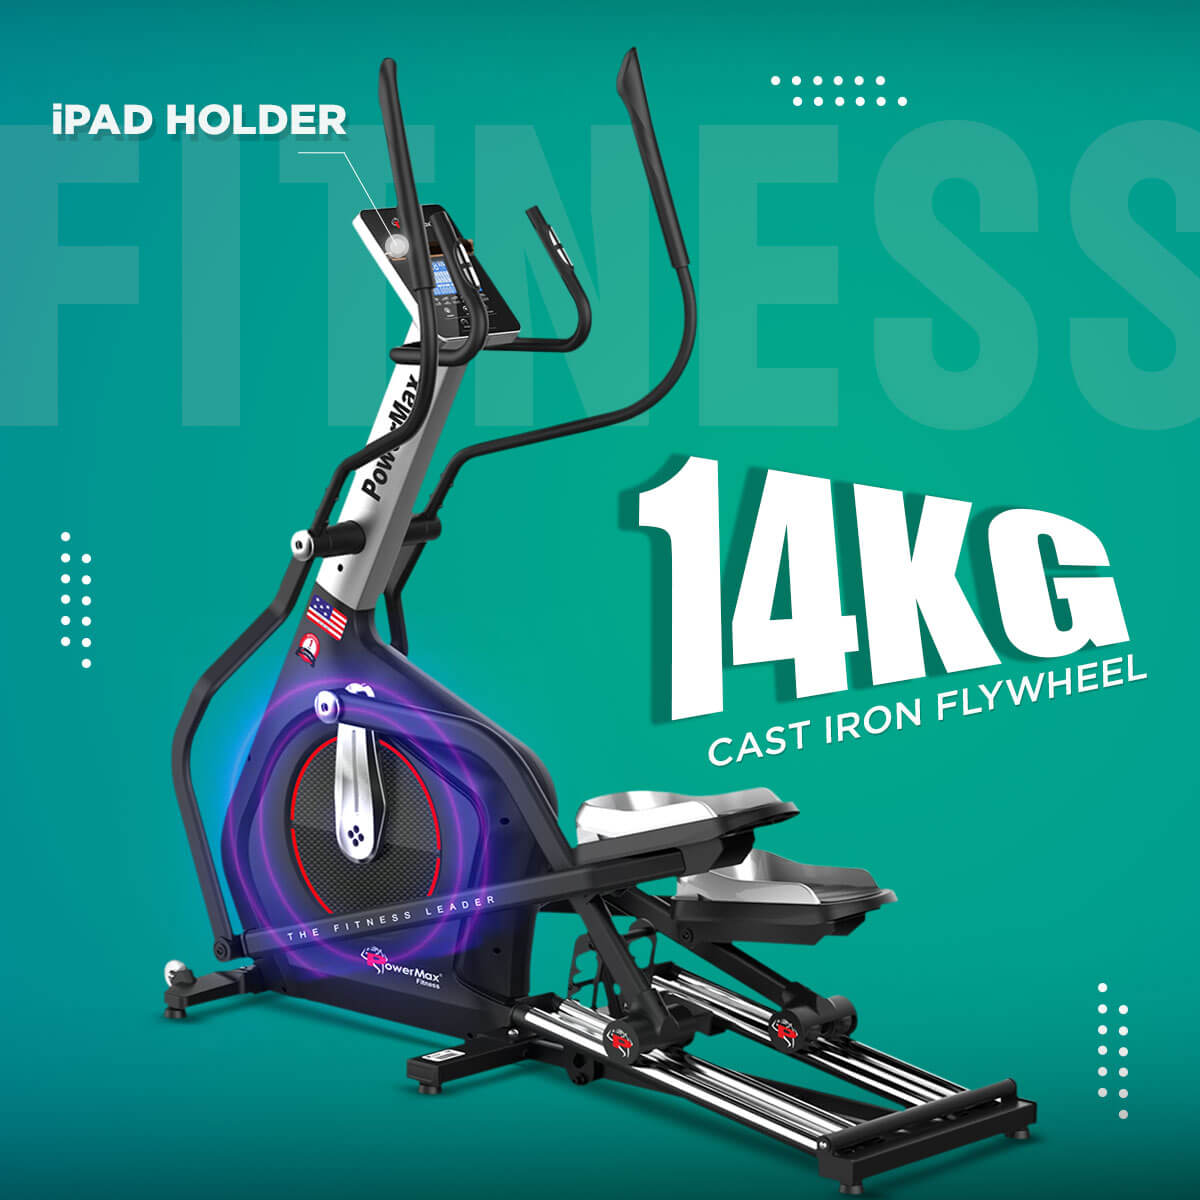 buy powermax ec-1800 commercial elliptical trainer with adjustable stride length